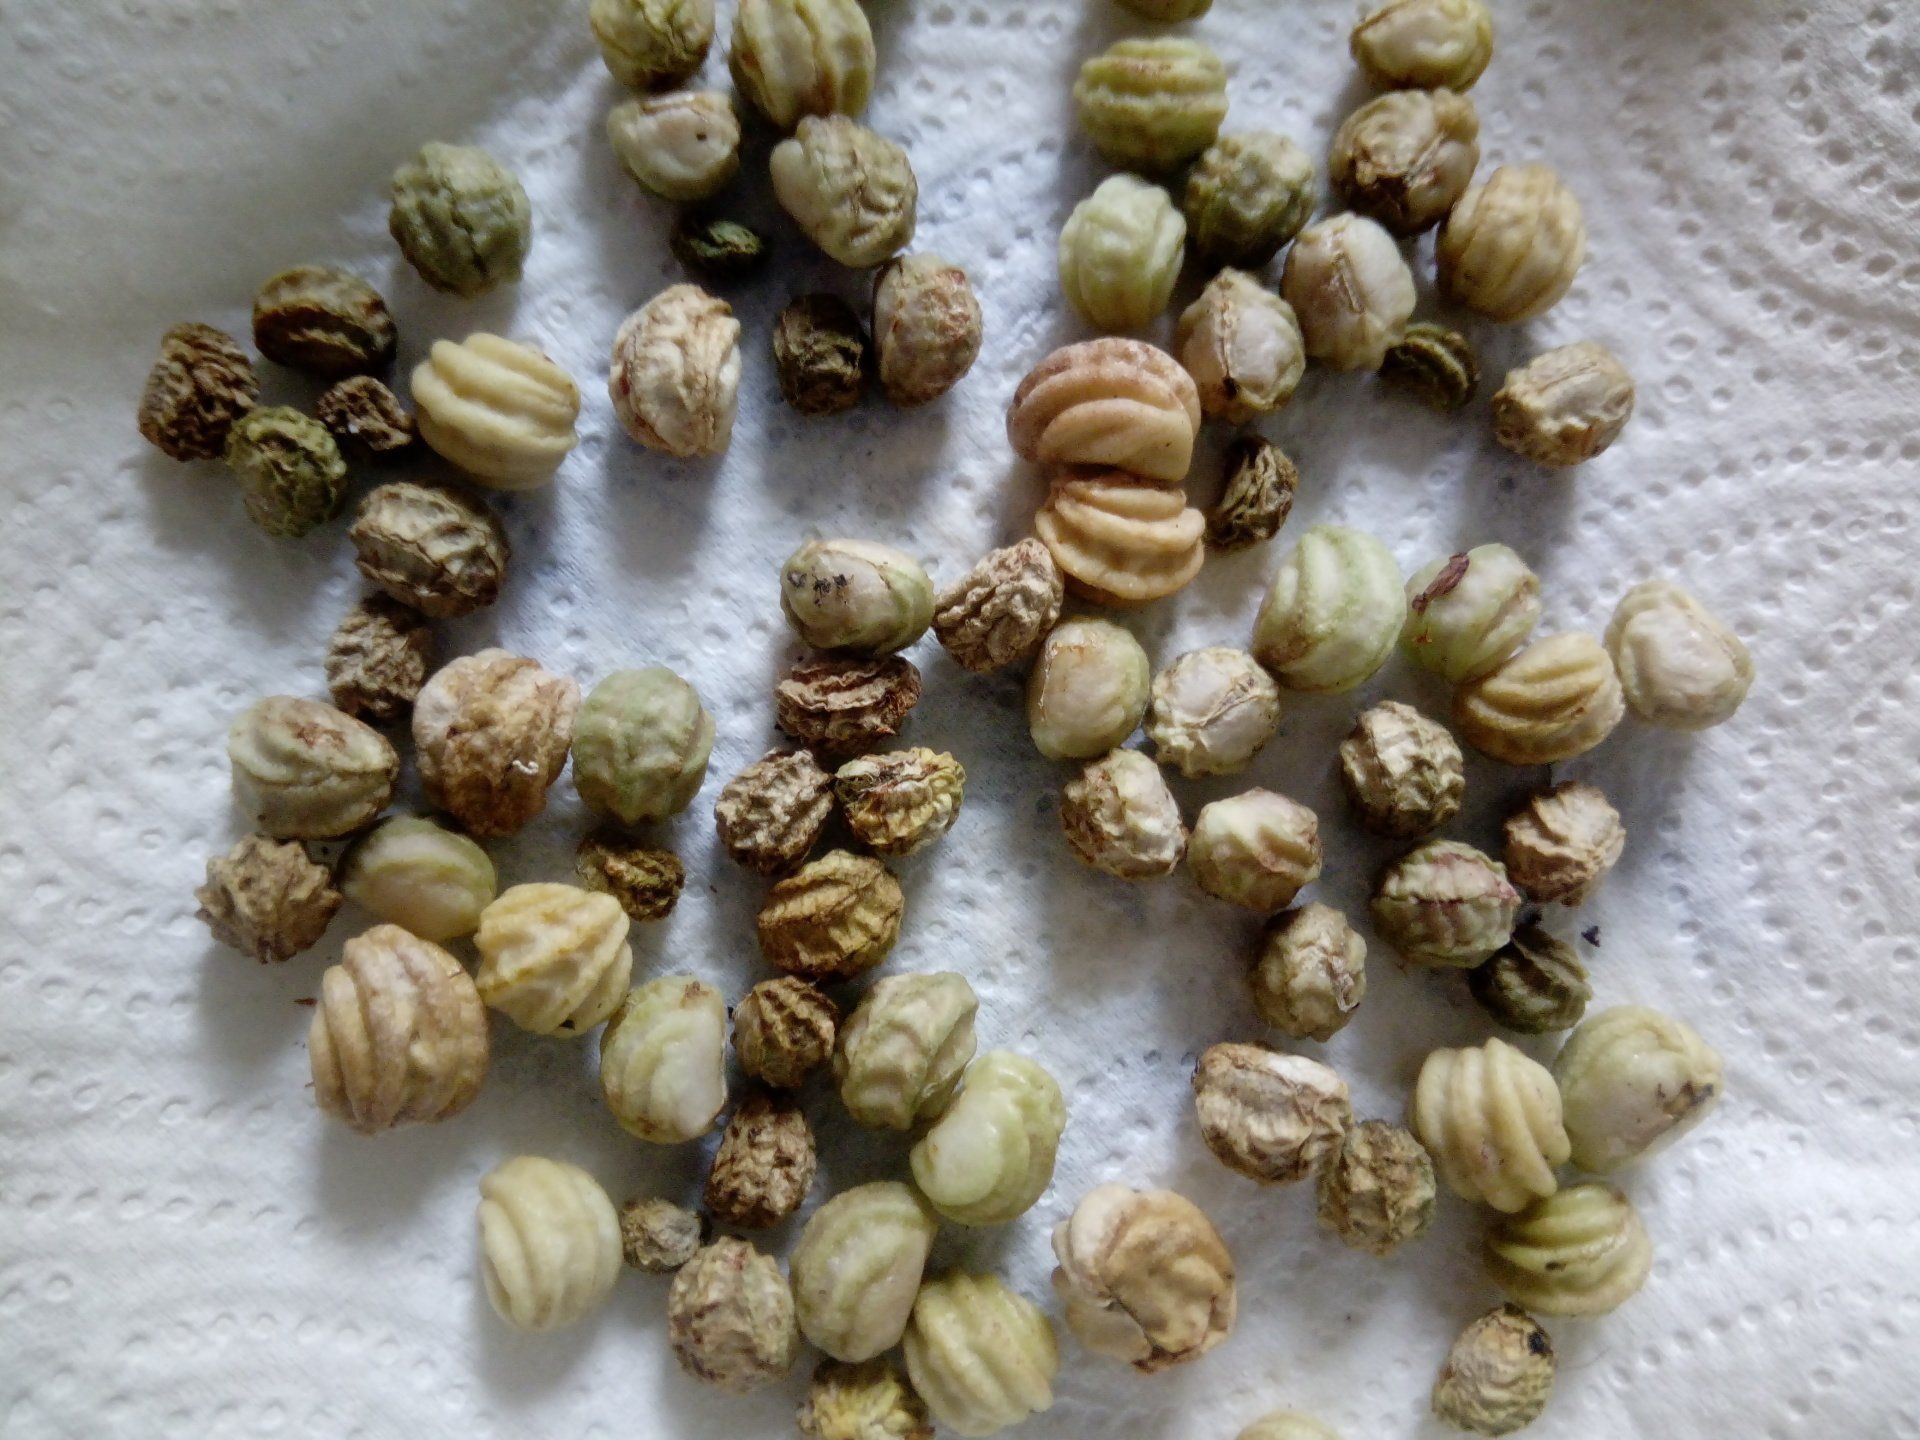 Nasturtium seeds drying